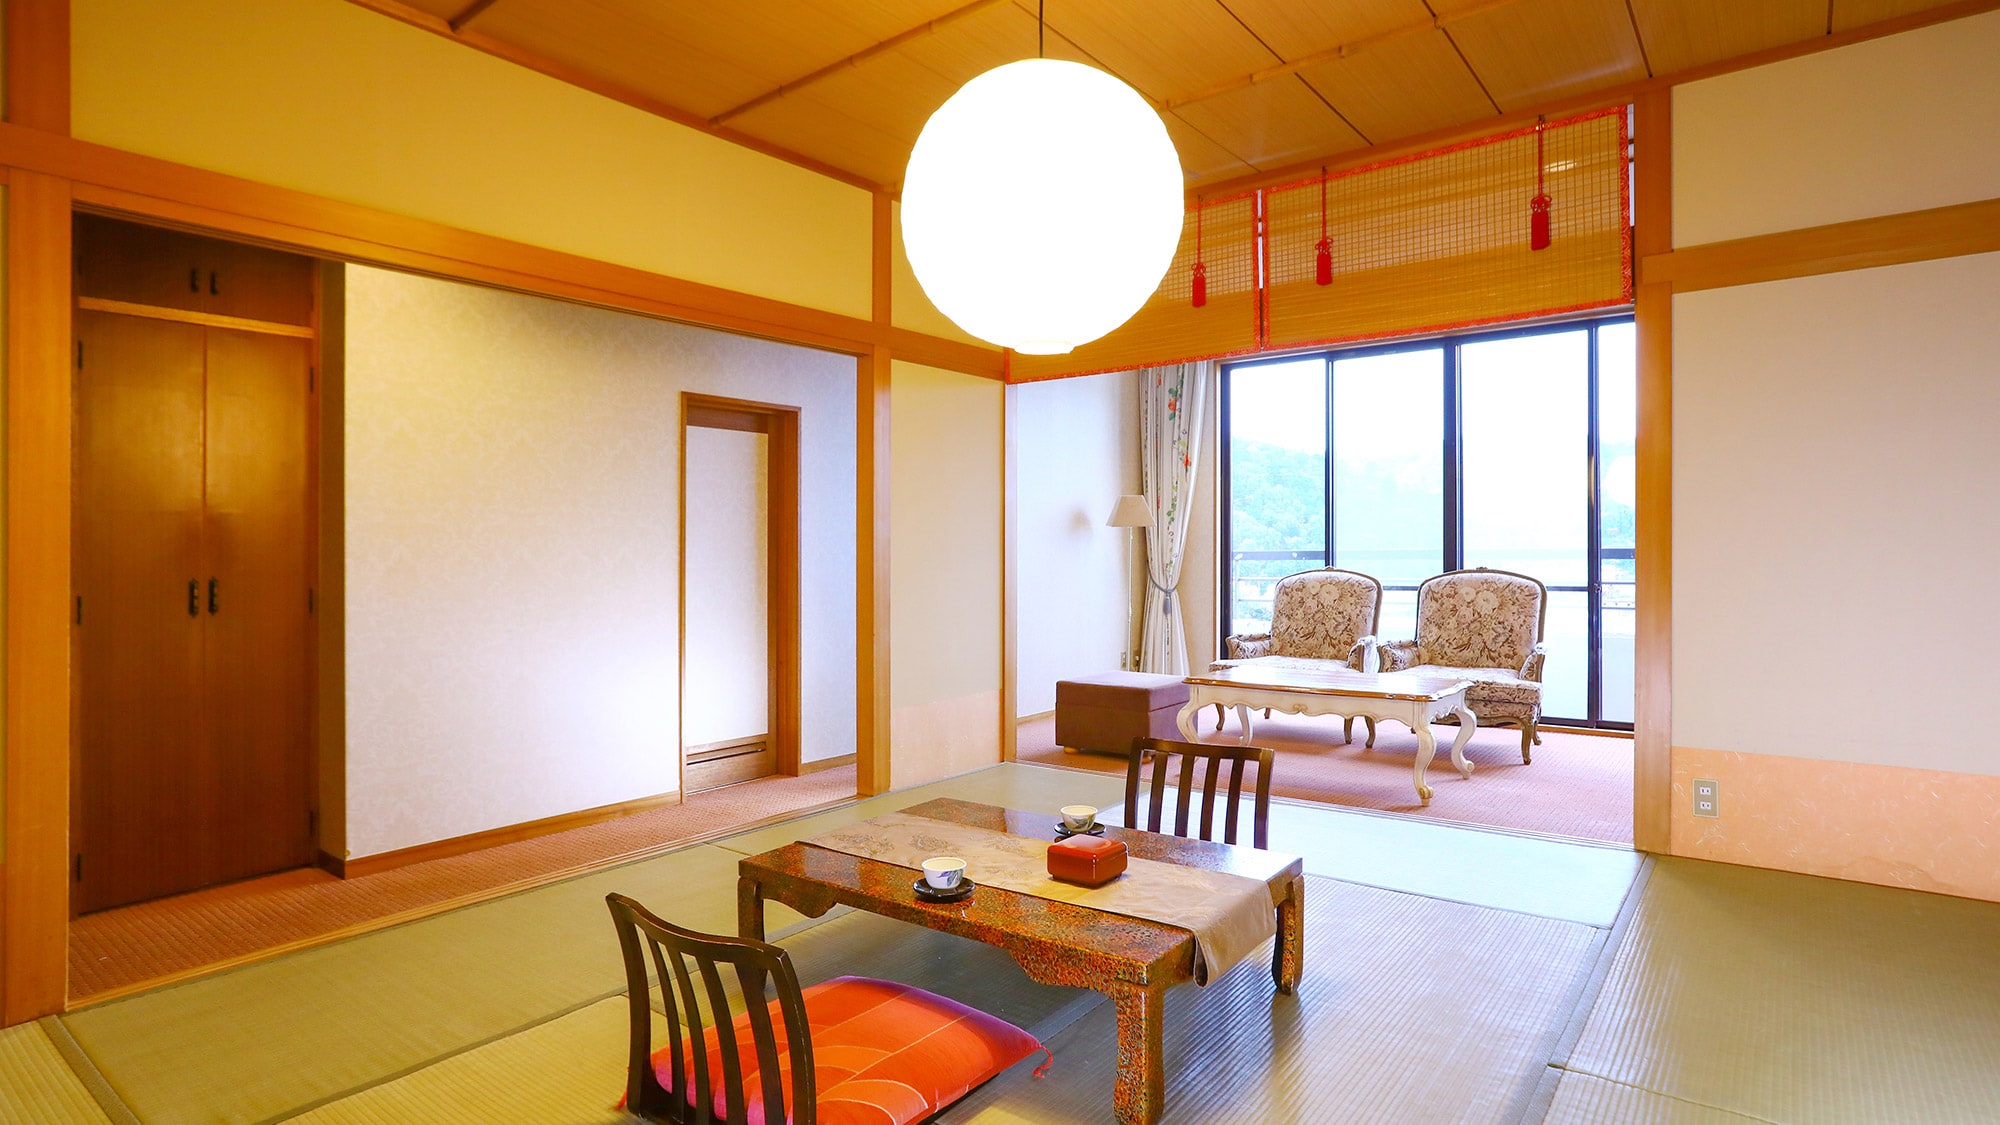 Japanese-style room-10 tatami mats